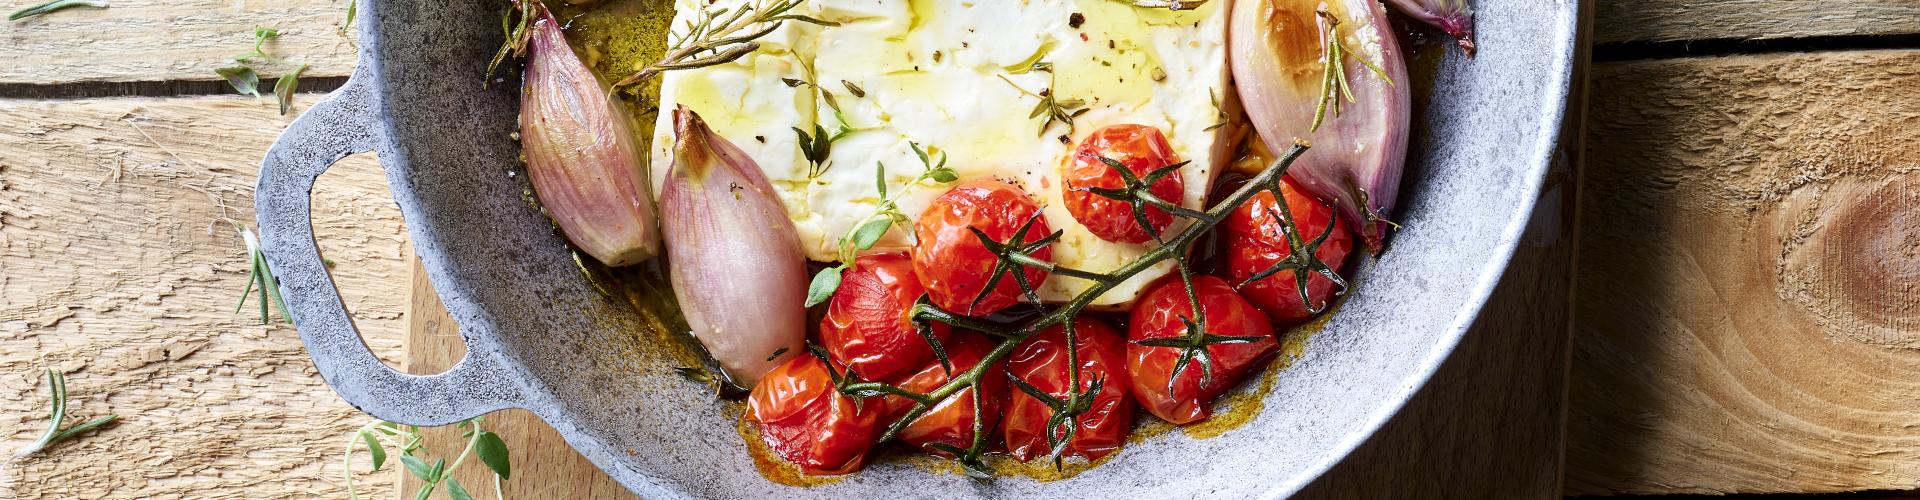 Recette Tomates cerises rôties au four (facile, rapide)